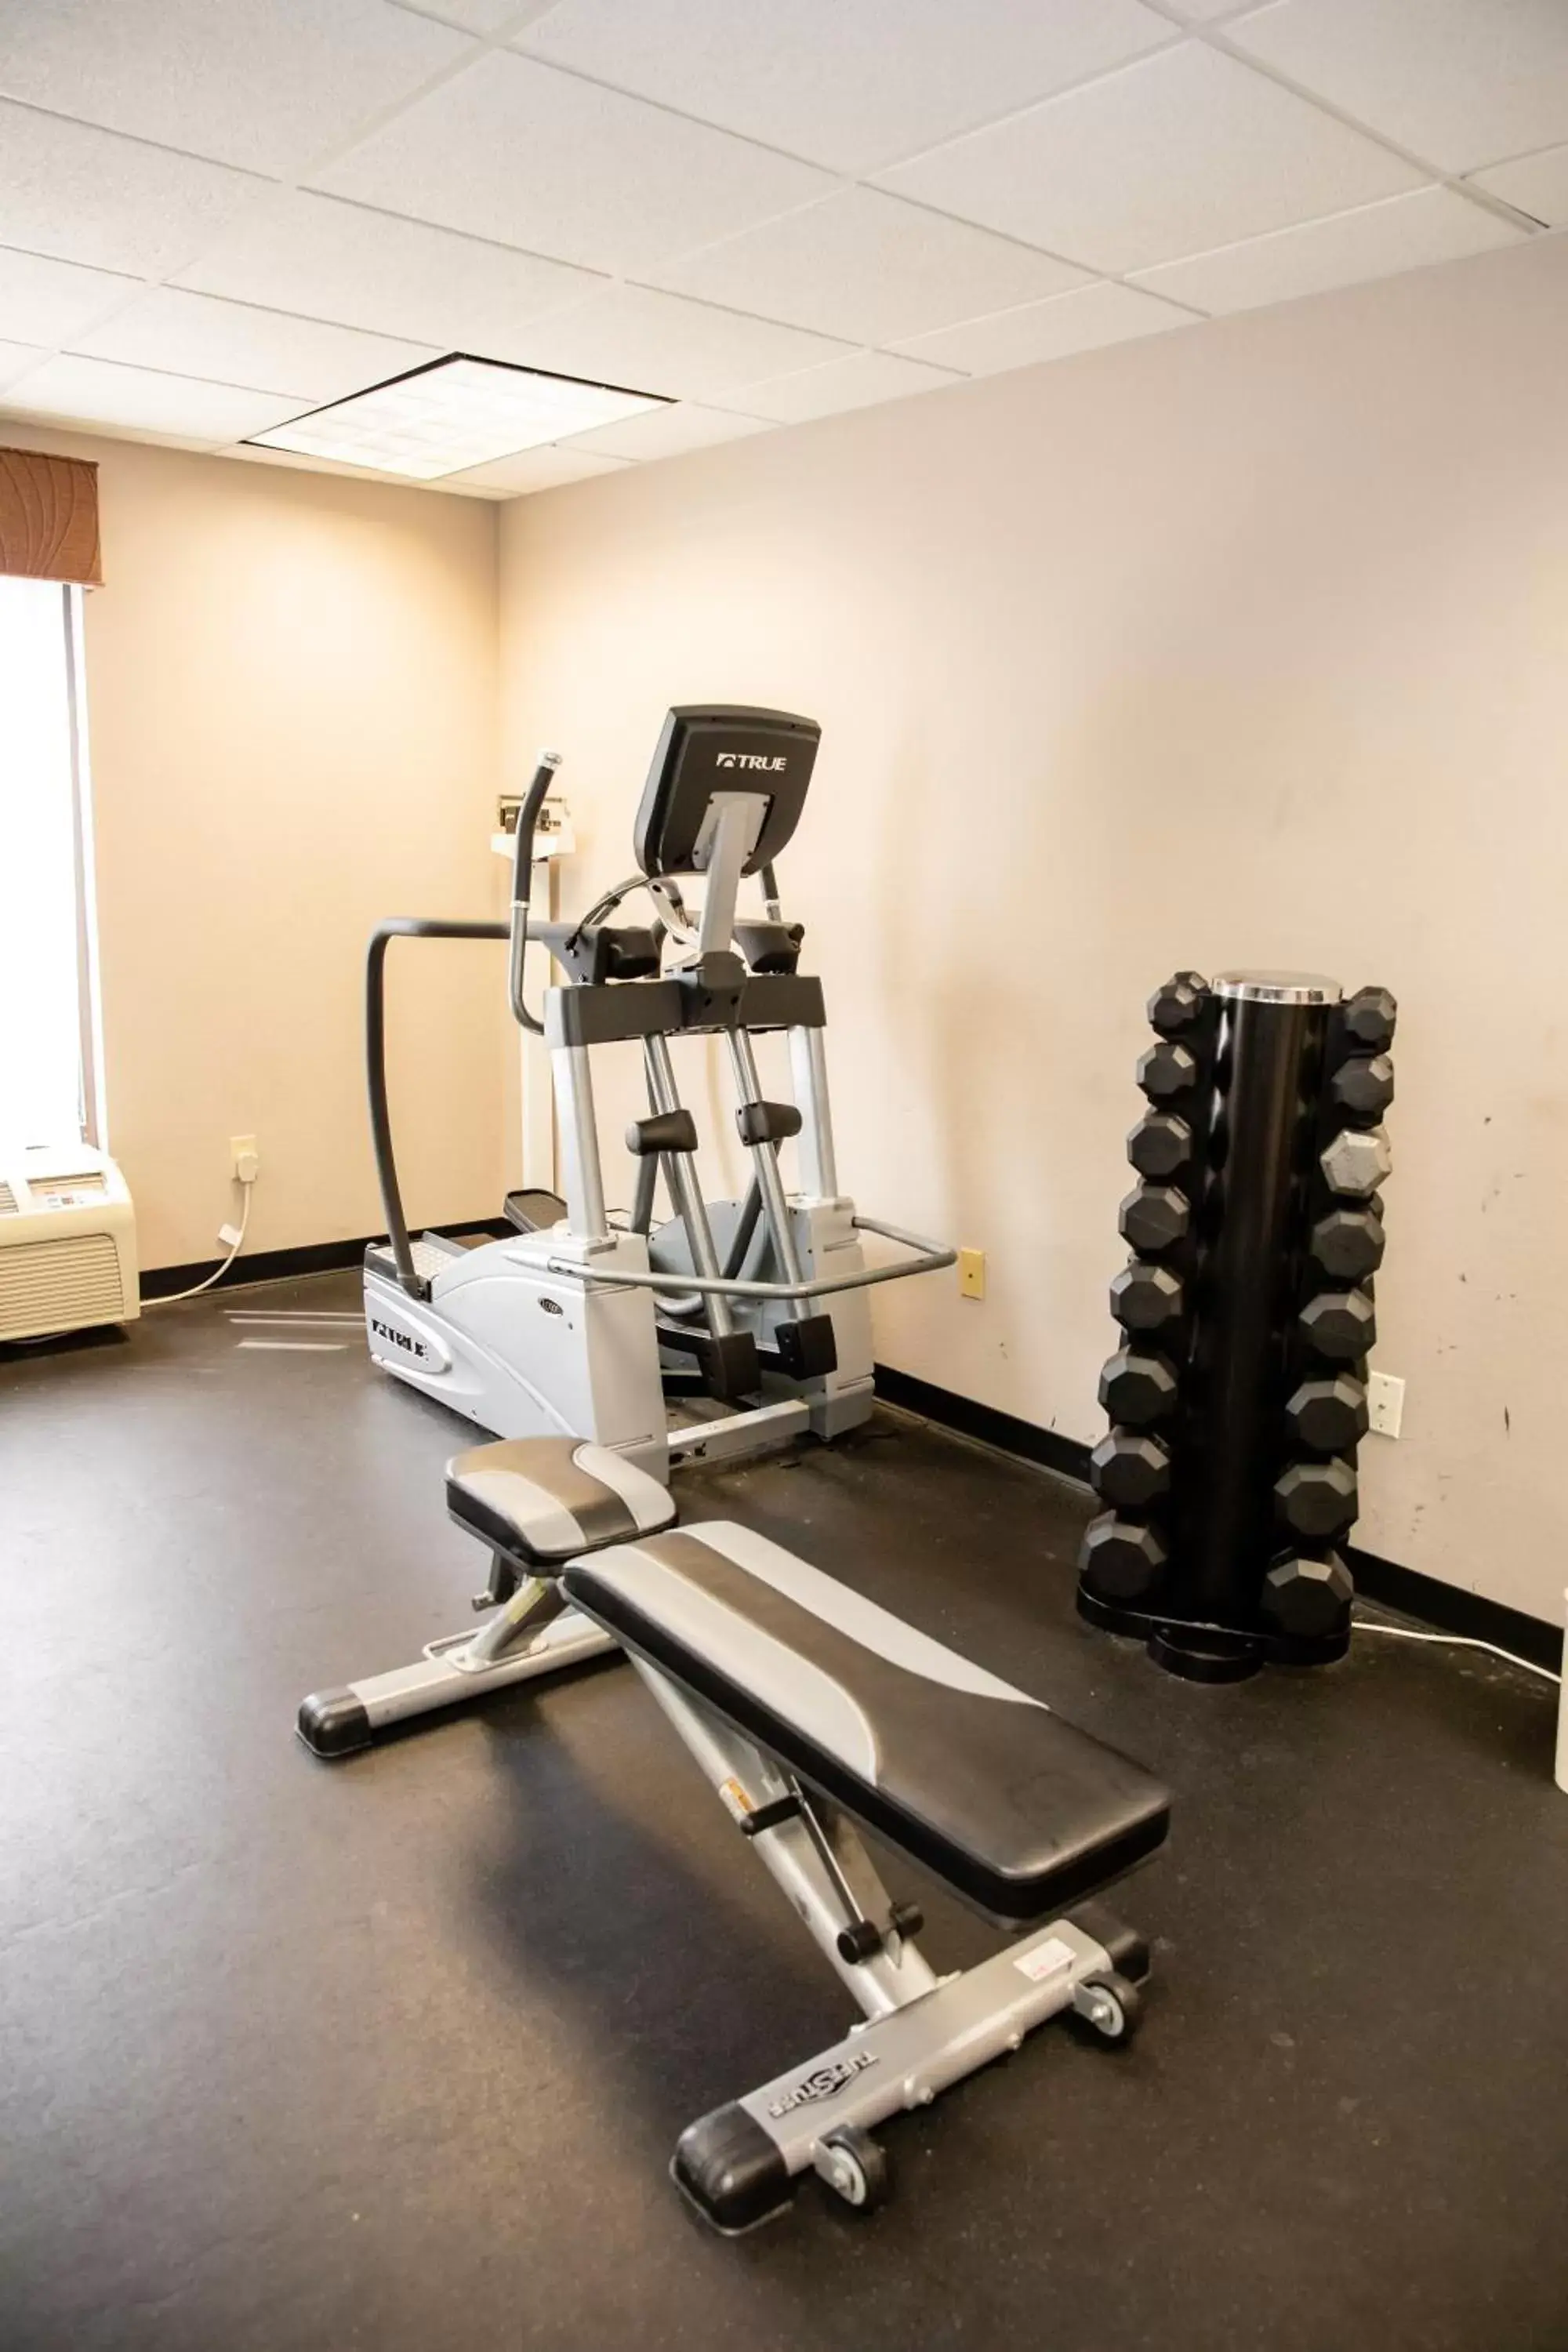 Fitness centre/facilities, Fitness Center/Facilities in Carpenter Street Hotel